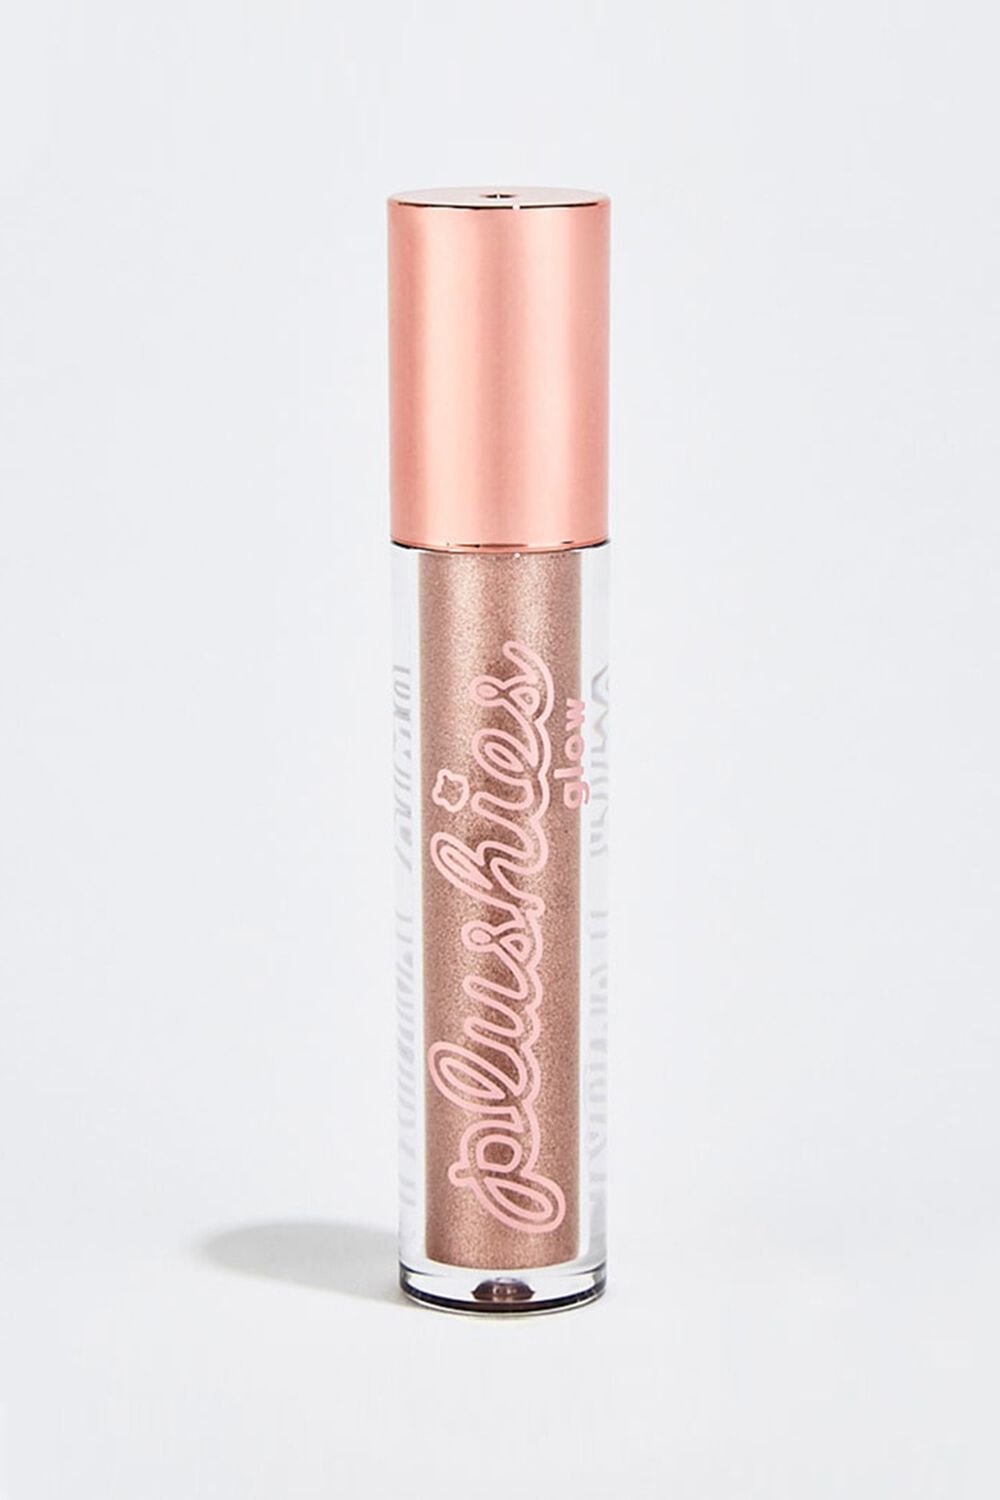 AMBROSIA Plushies Glow Liquid Lipstick, image 1